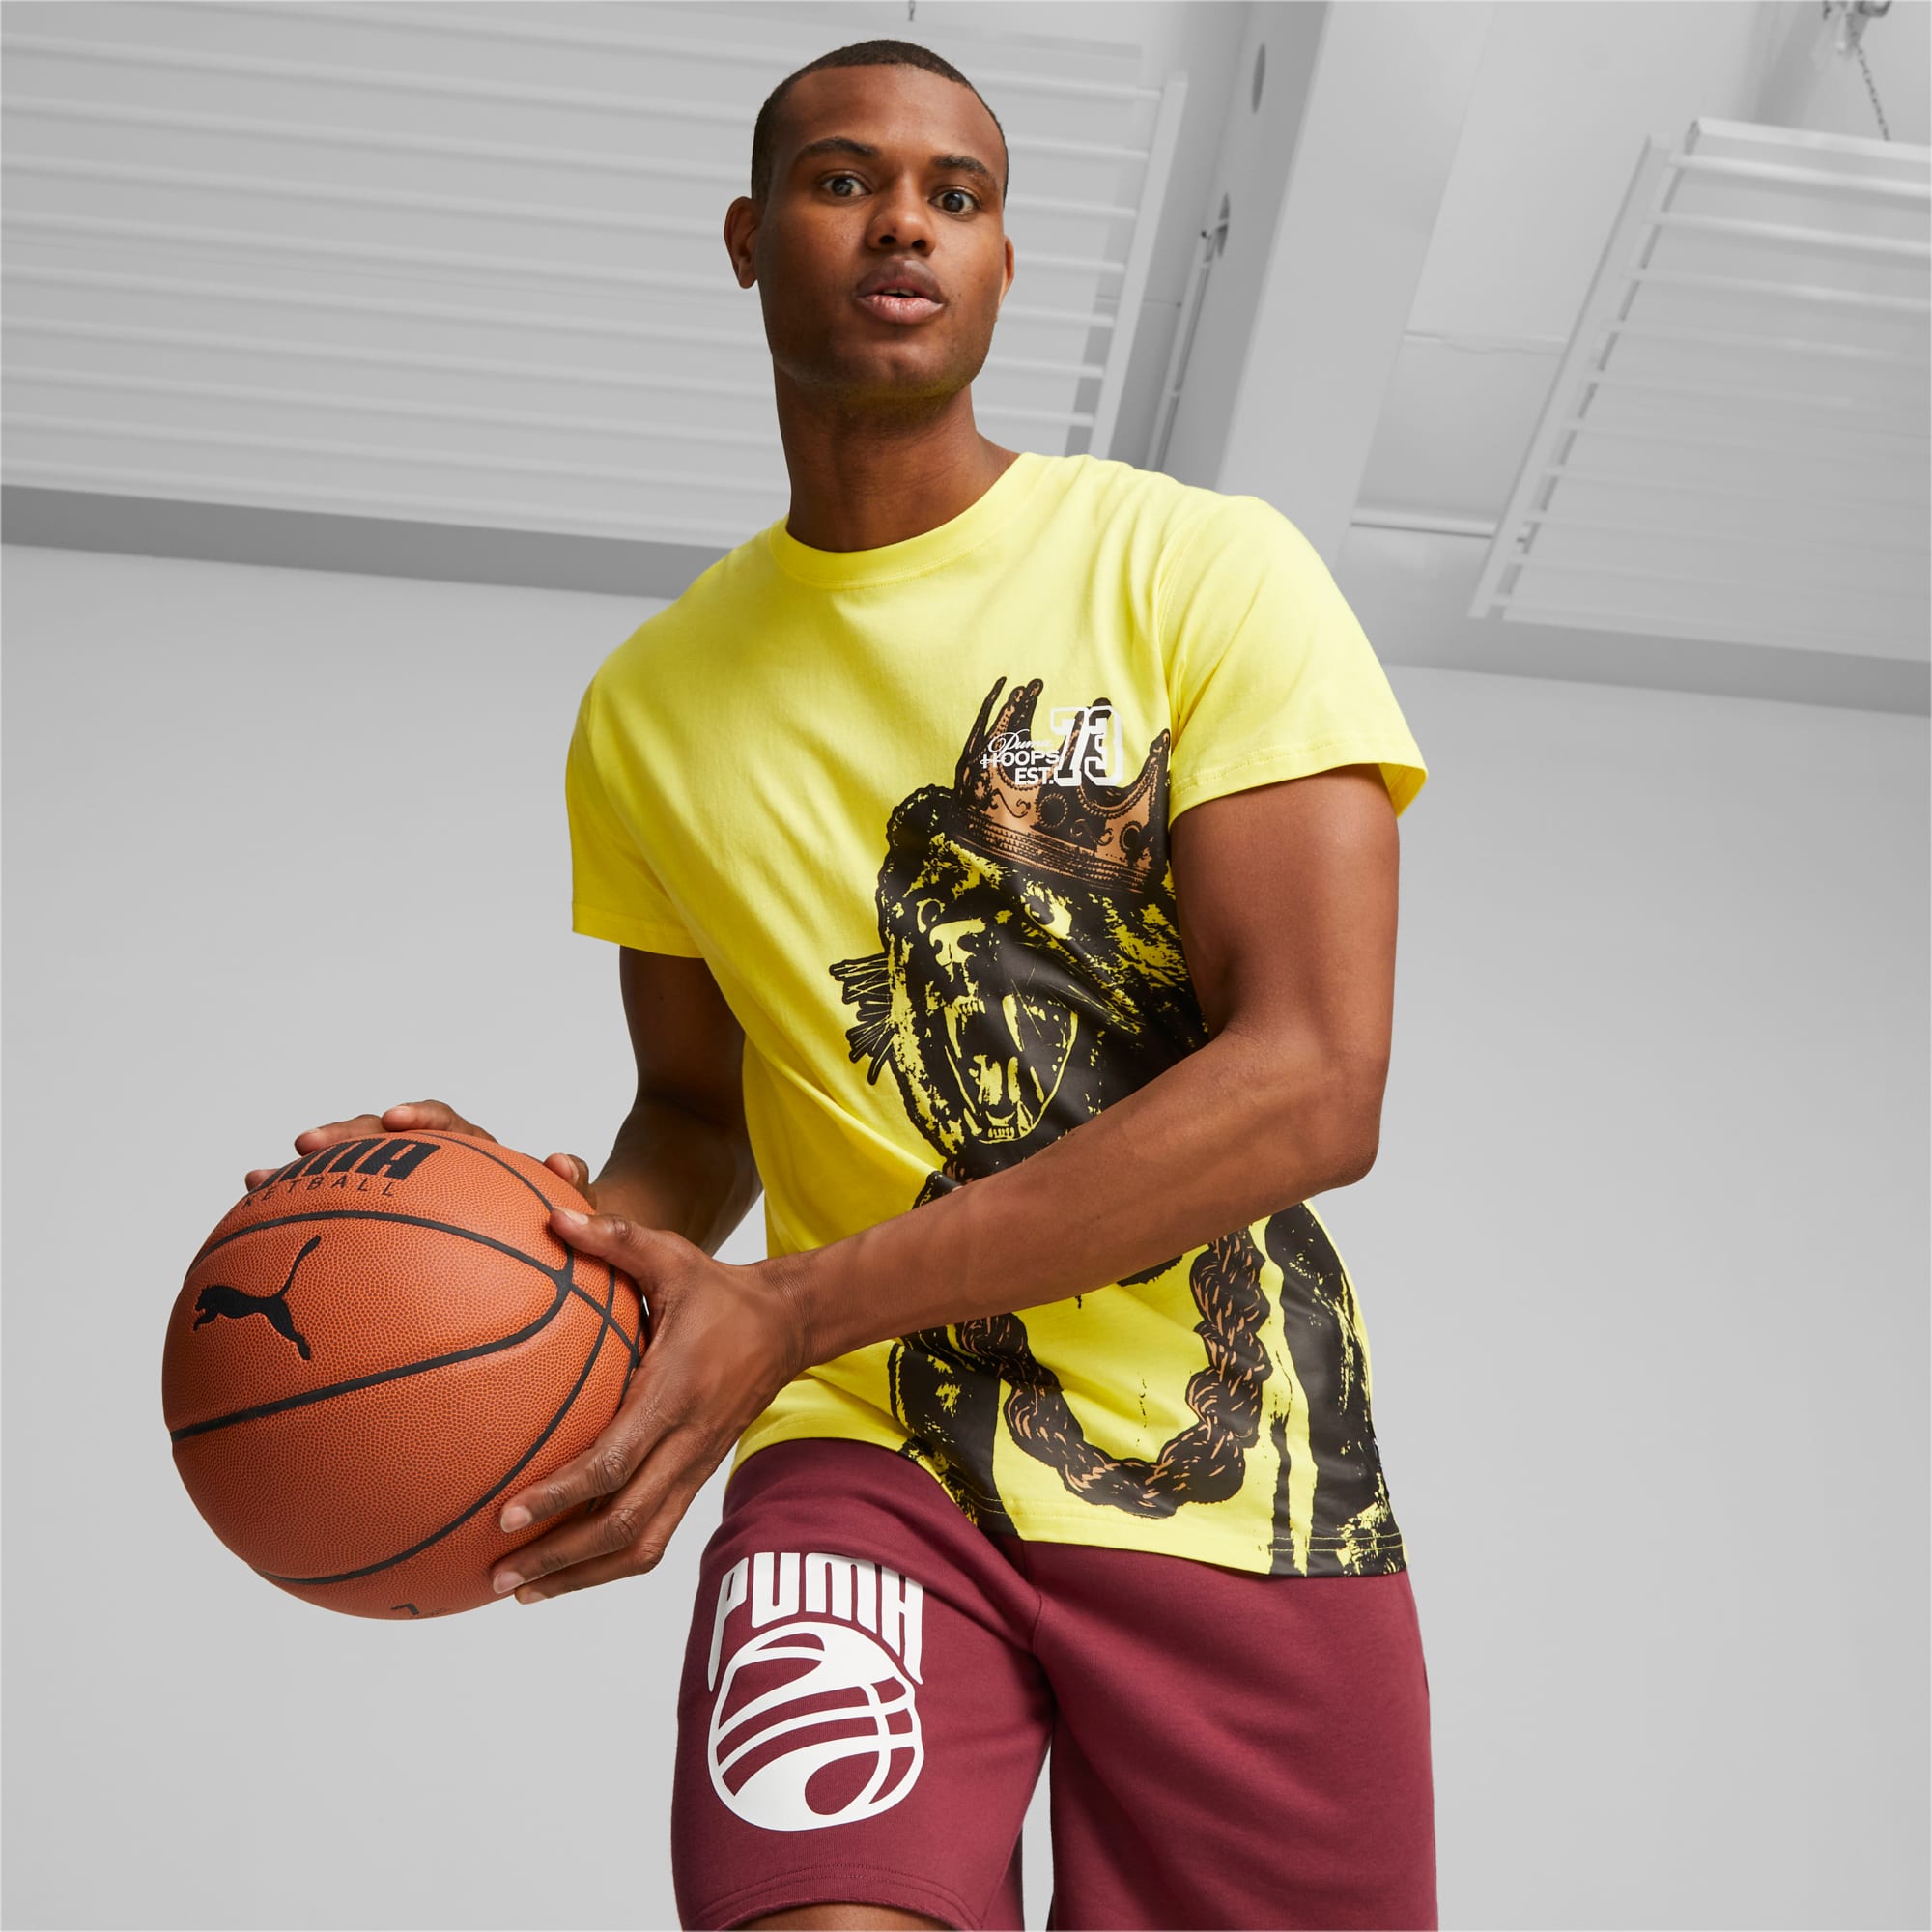 Nike Basketball Original Hoops Graphic T-shirt in White for Men